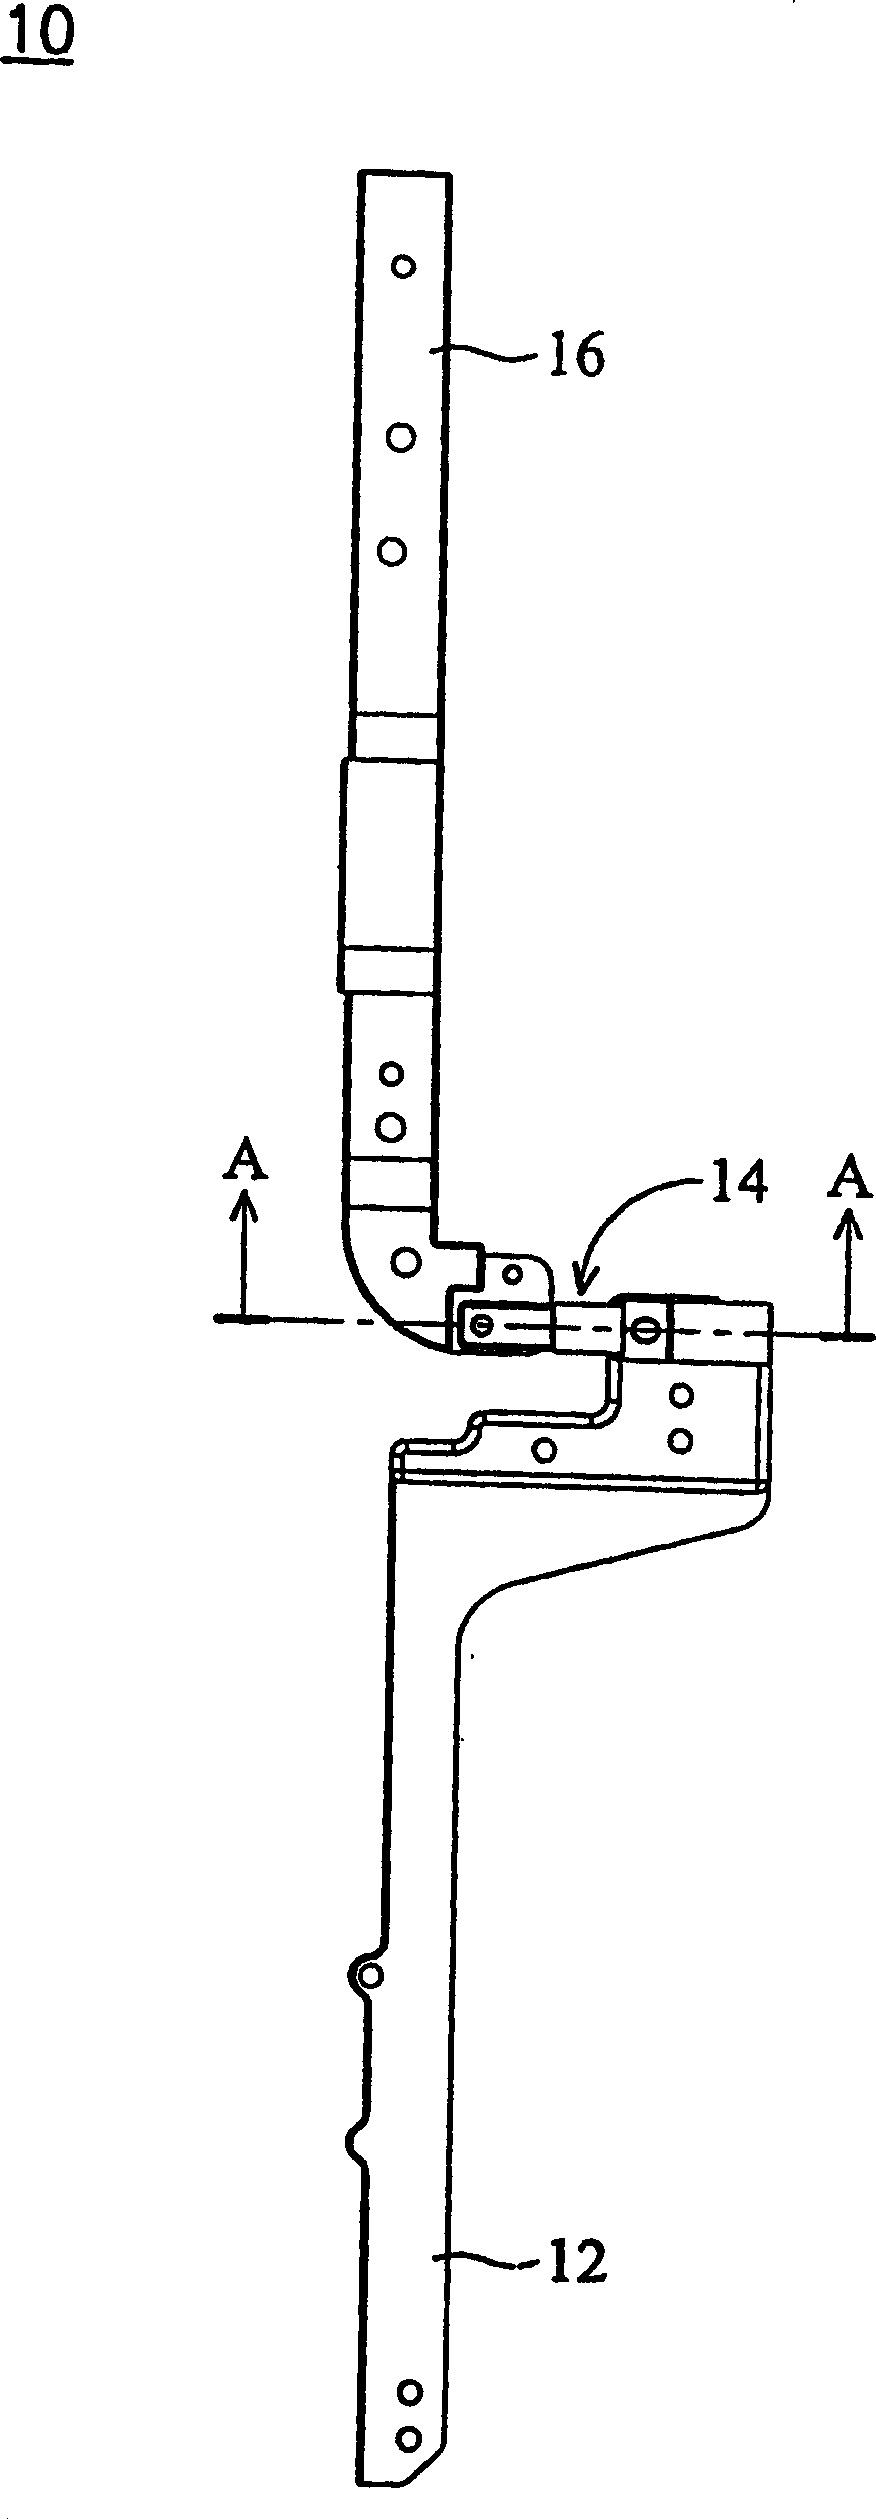 Buckle lock structure